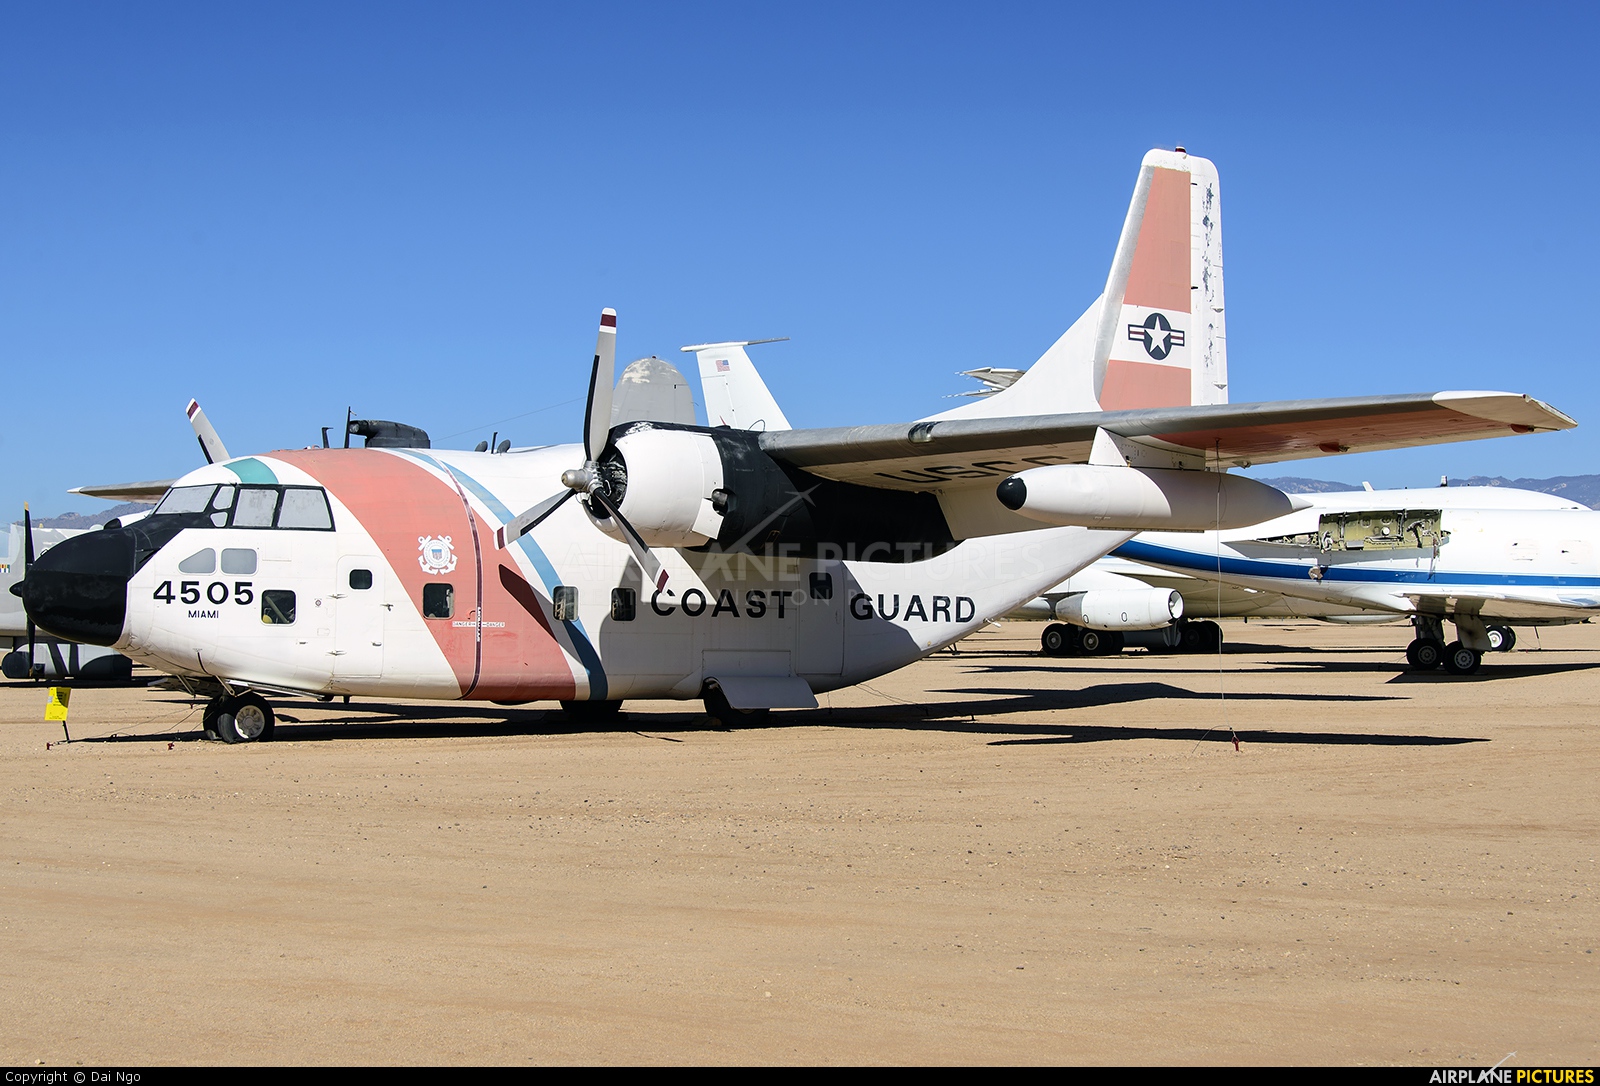 USA - Coast Guard 4505 aircraft at Tucson - Pima Air & Space Museum